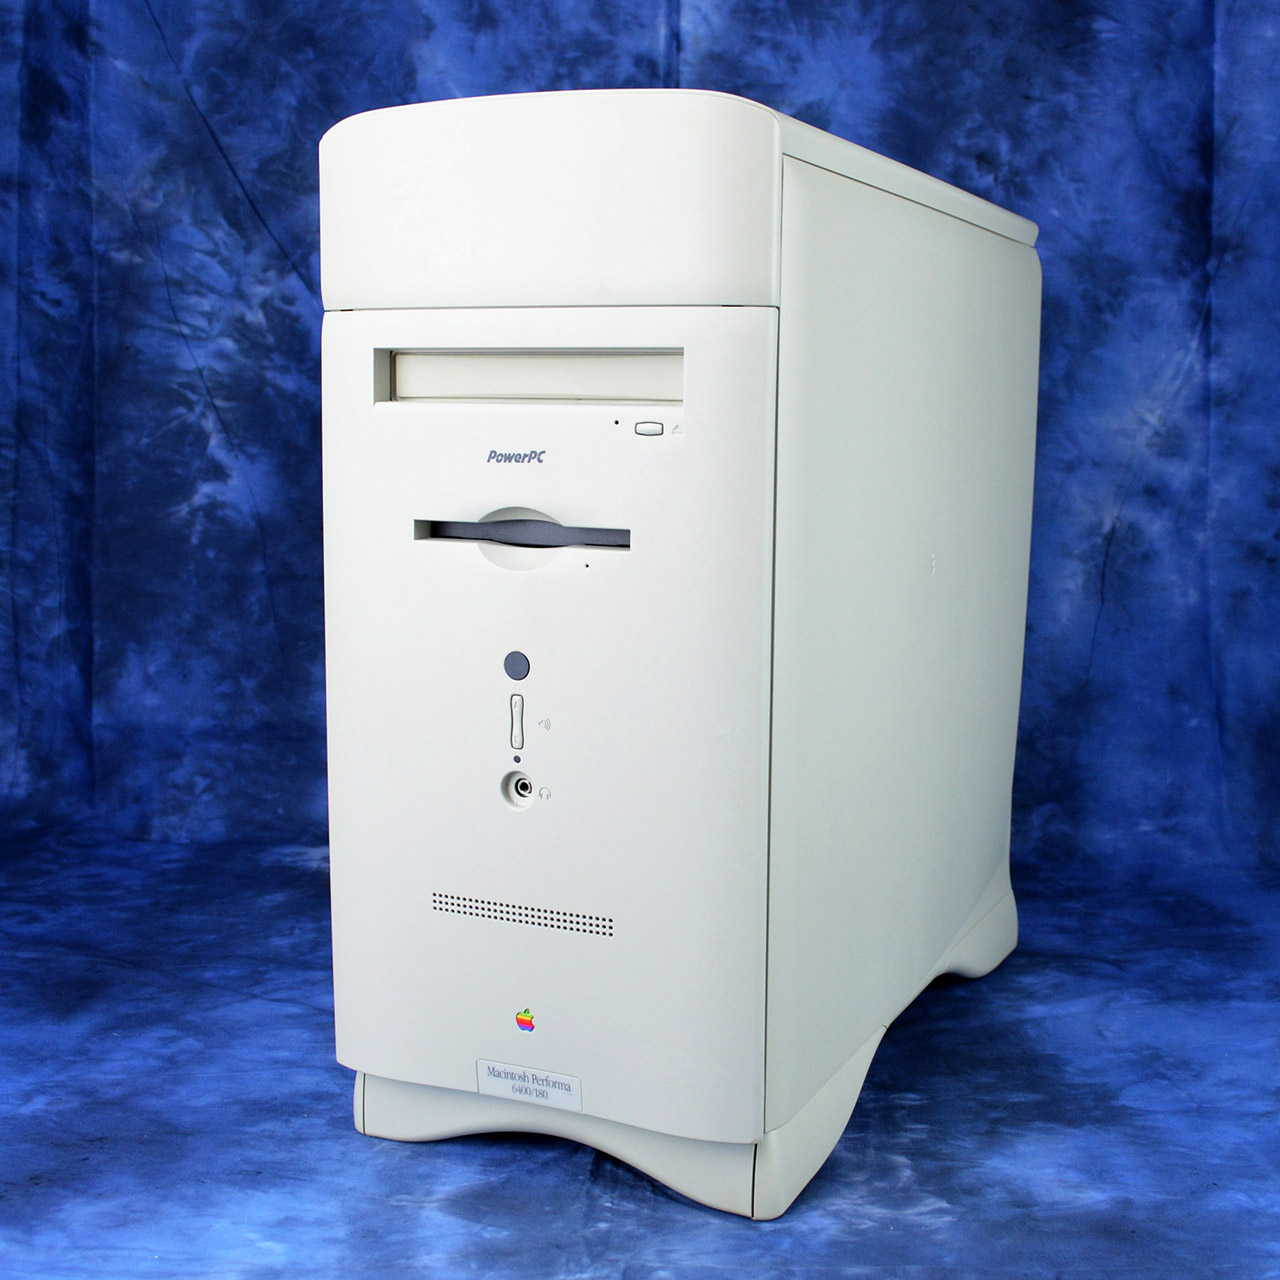 Macintosh Performa 6400